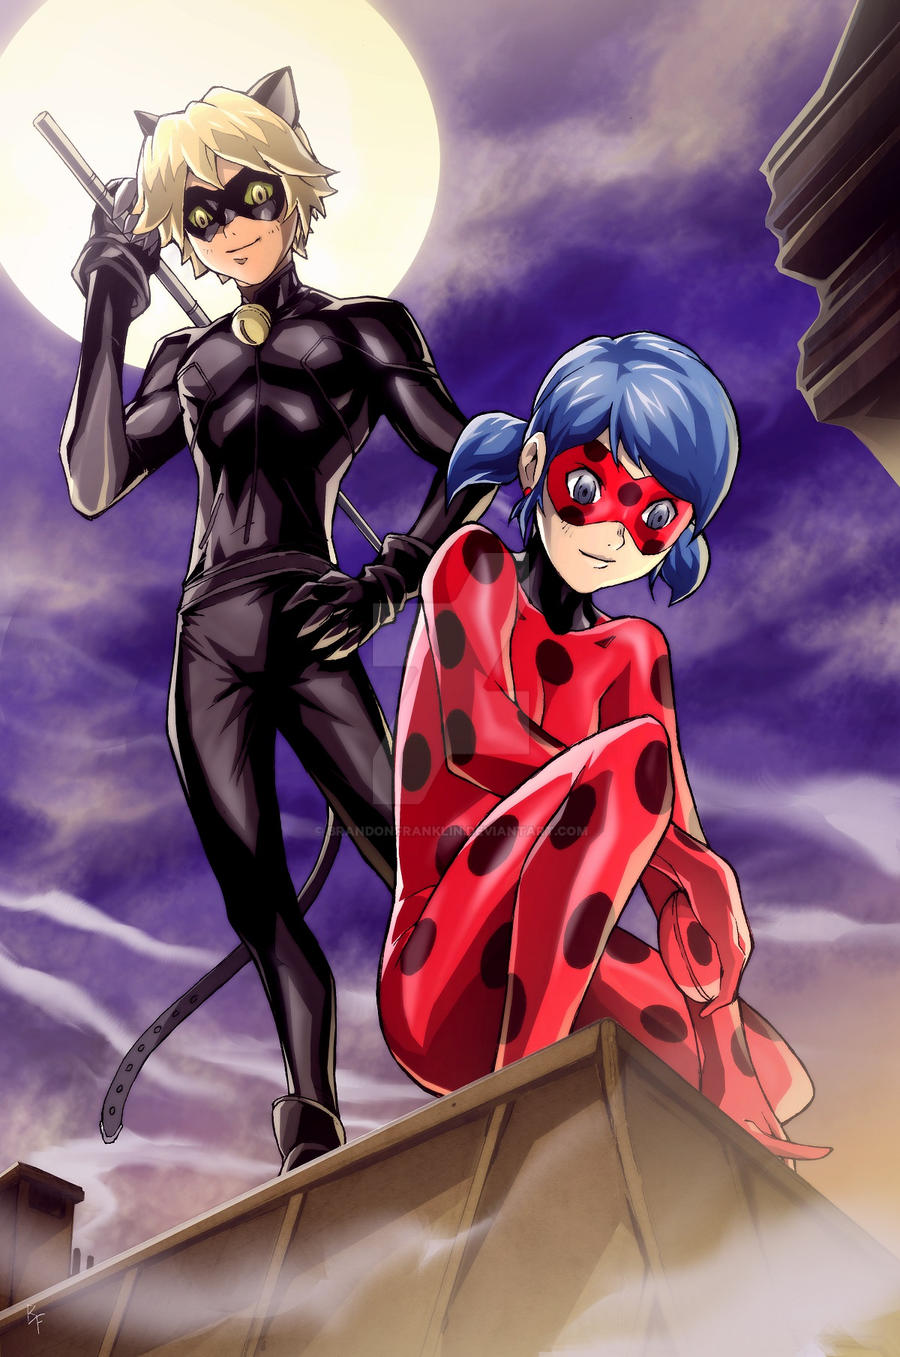 Ladybug and Cat Noir meet their Anime Version, MLB